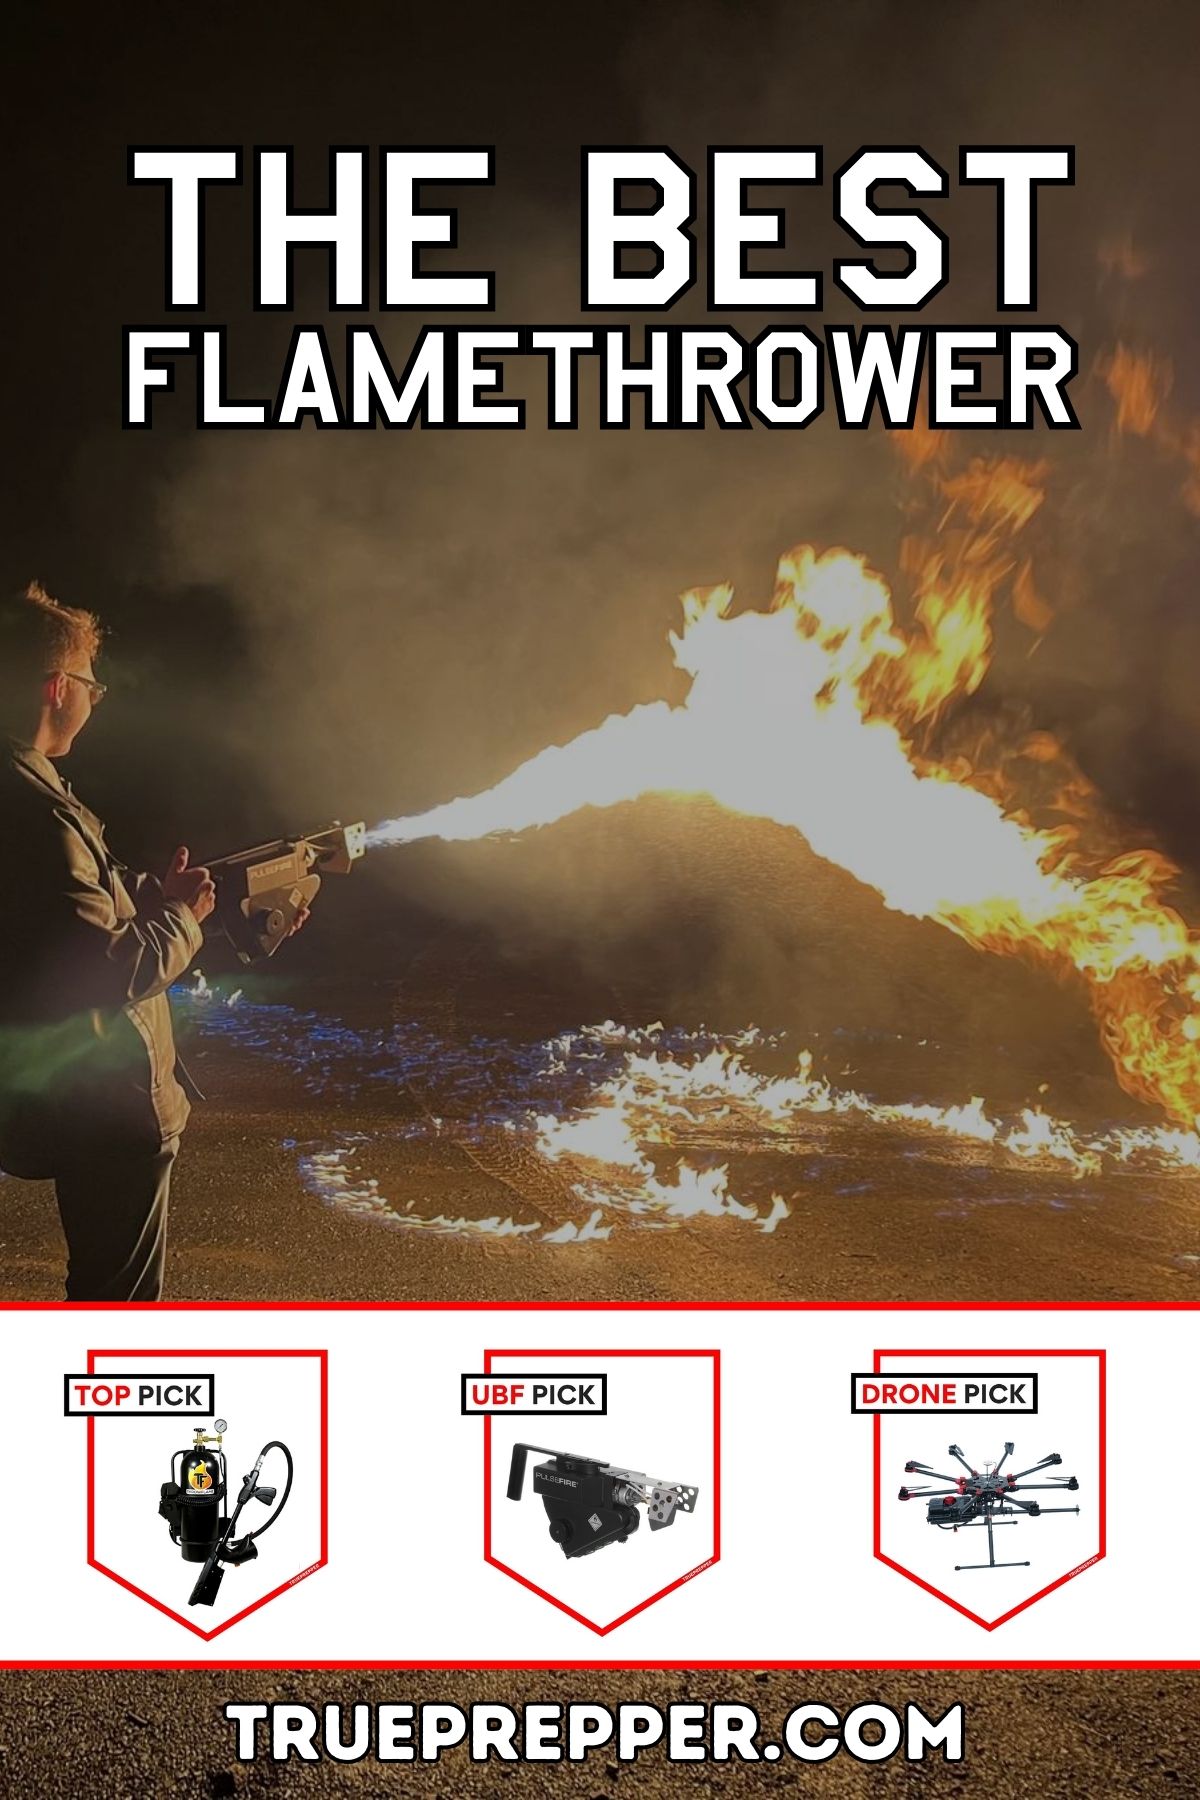 The Best Flamethrower